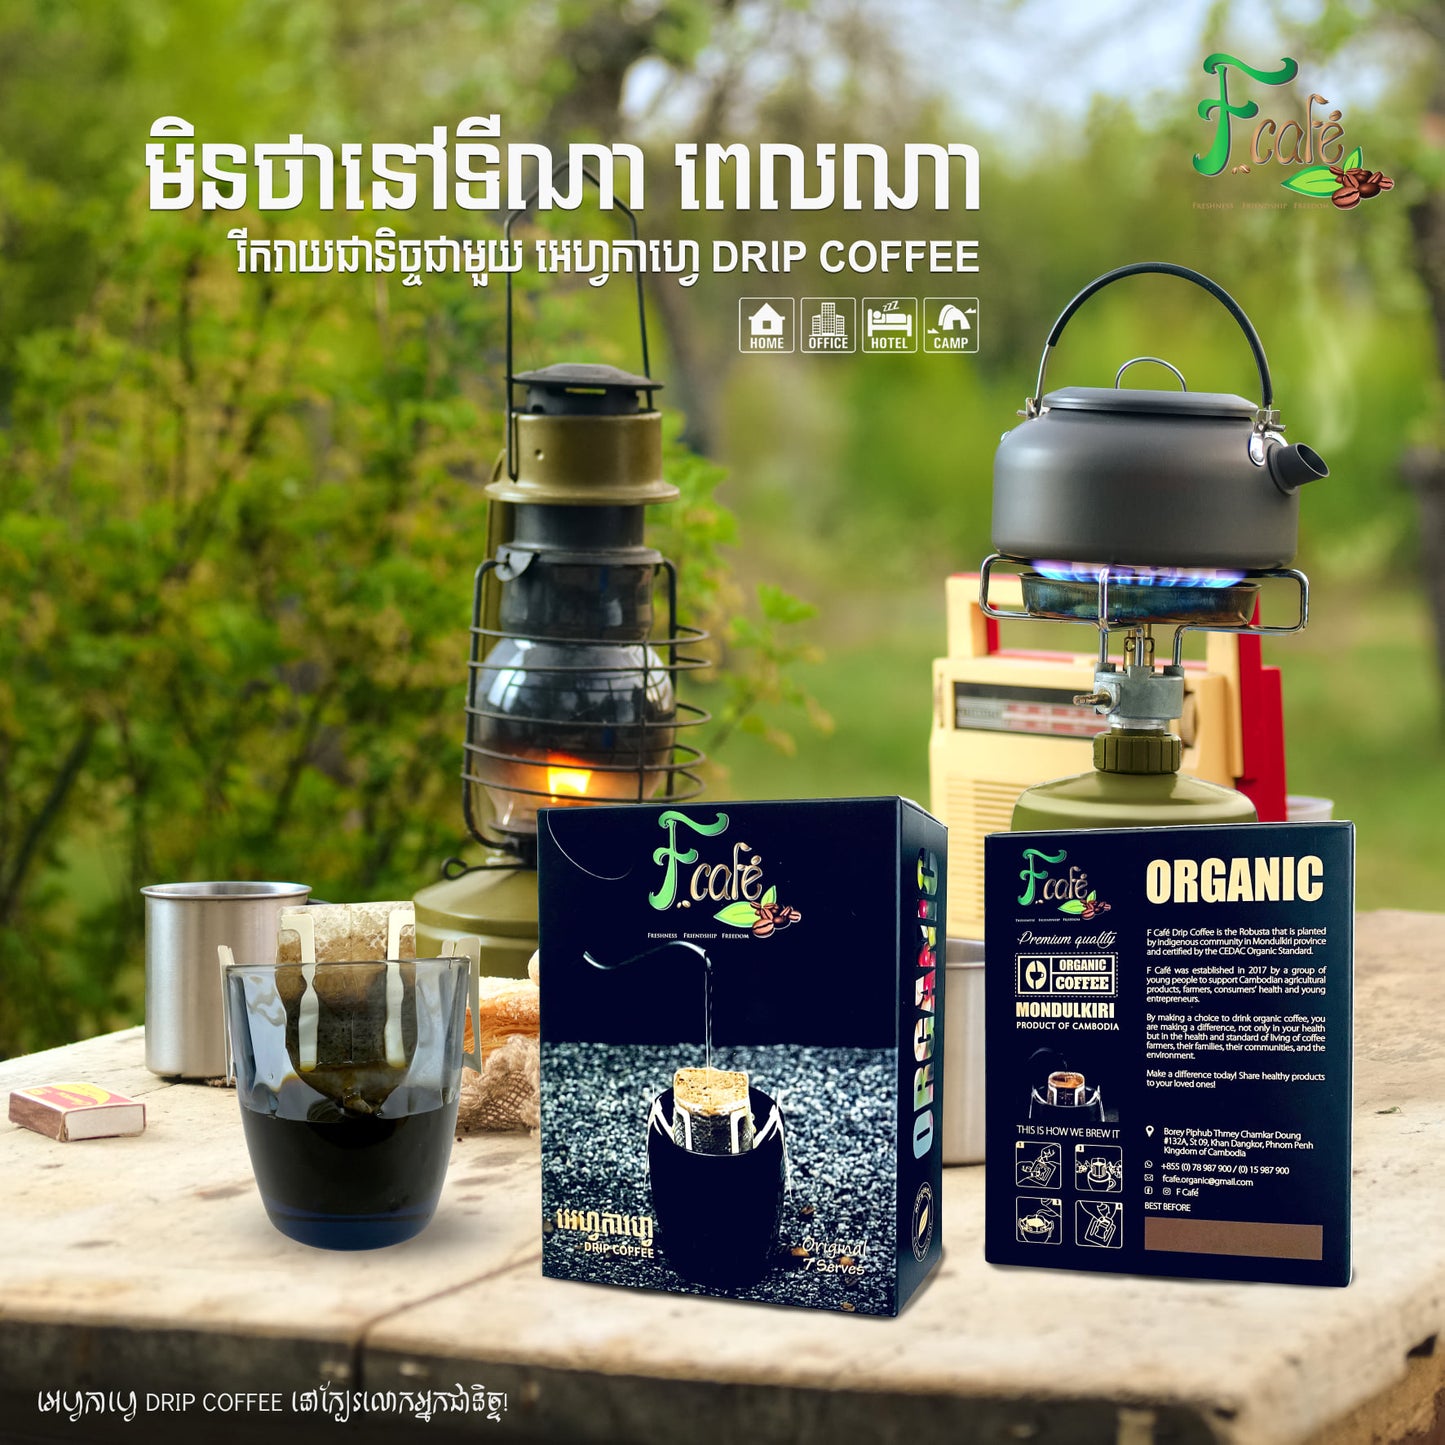 Organic Drip Coffee Mondulkiri ( 7 servings )